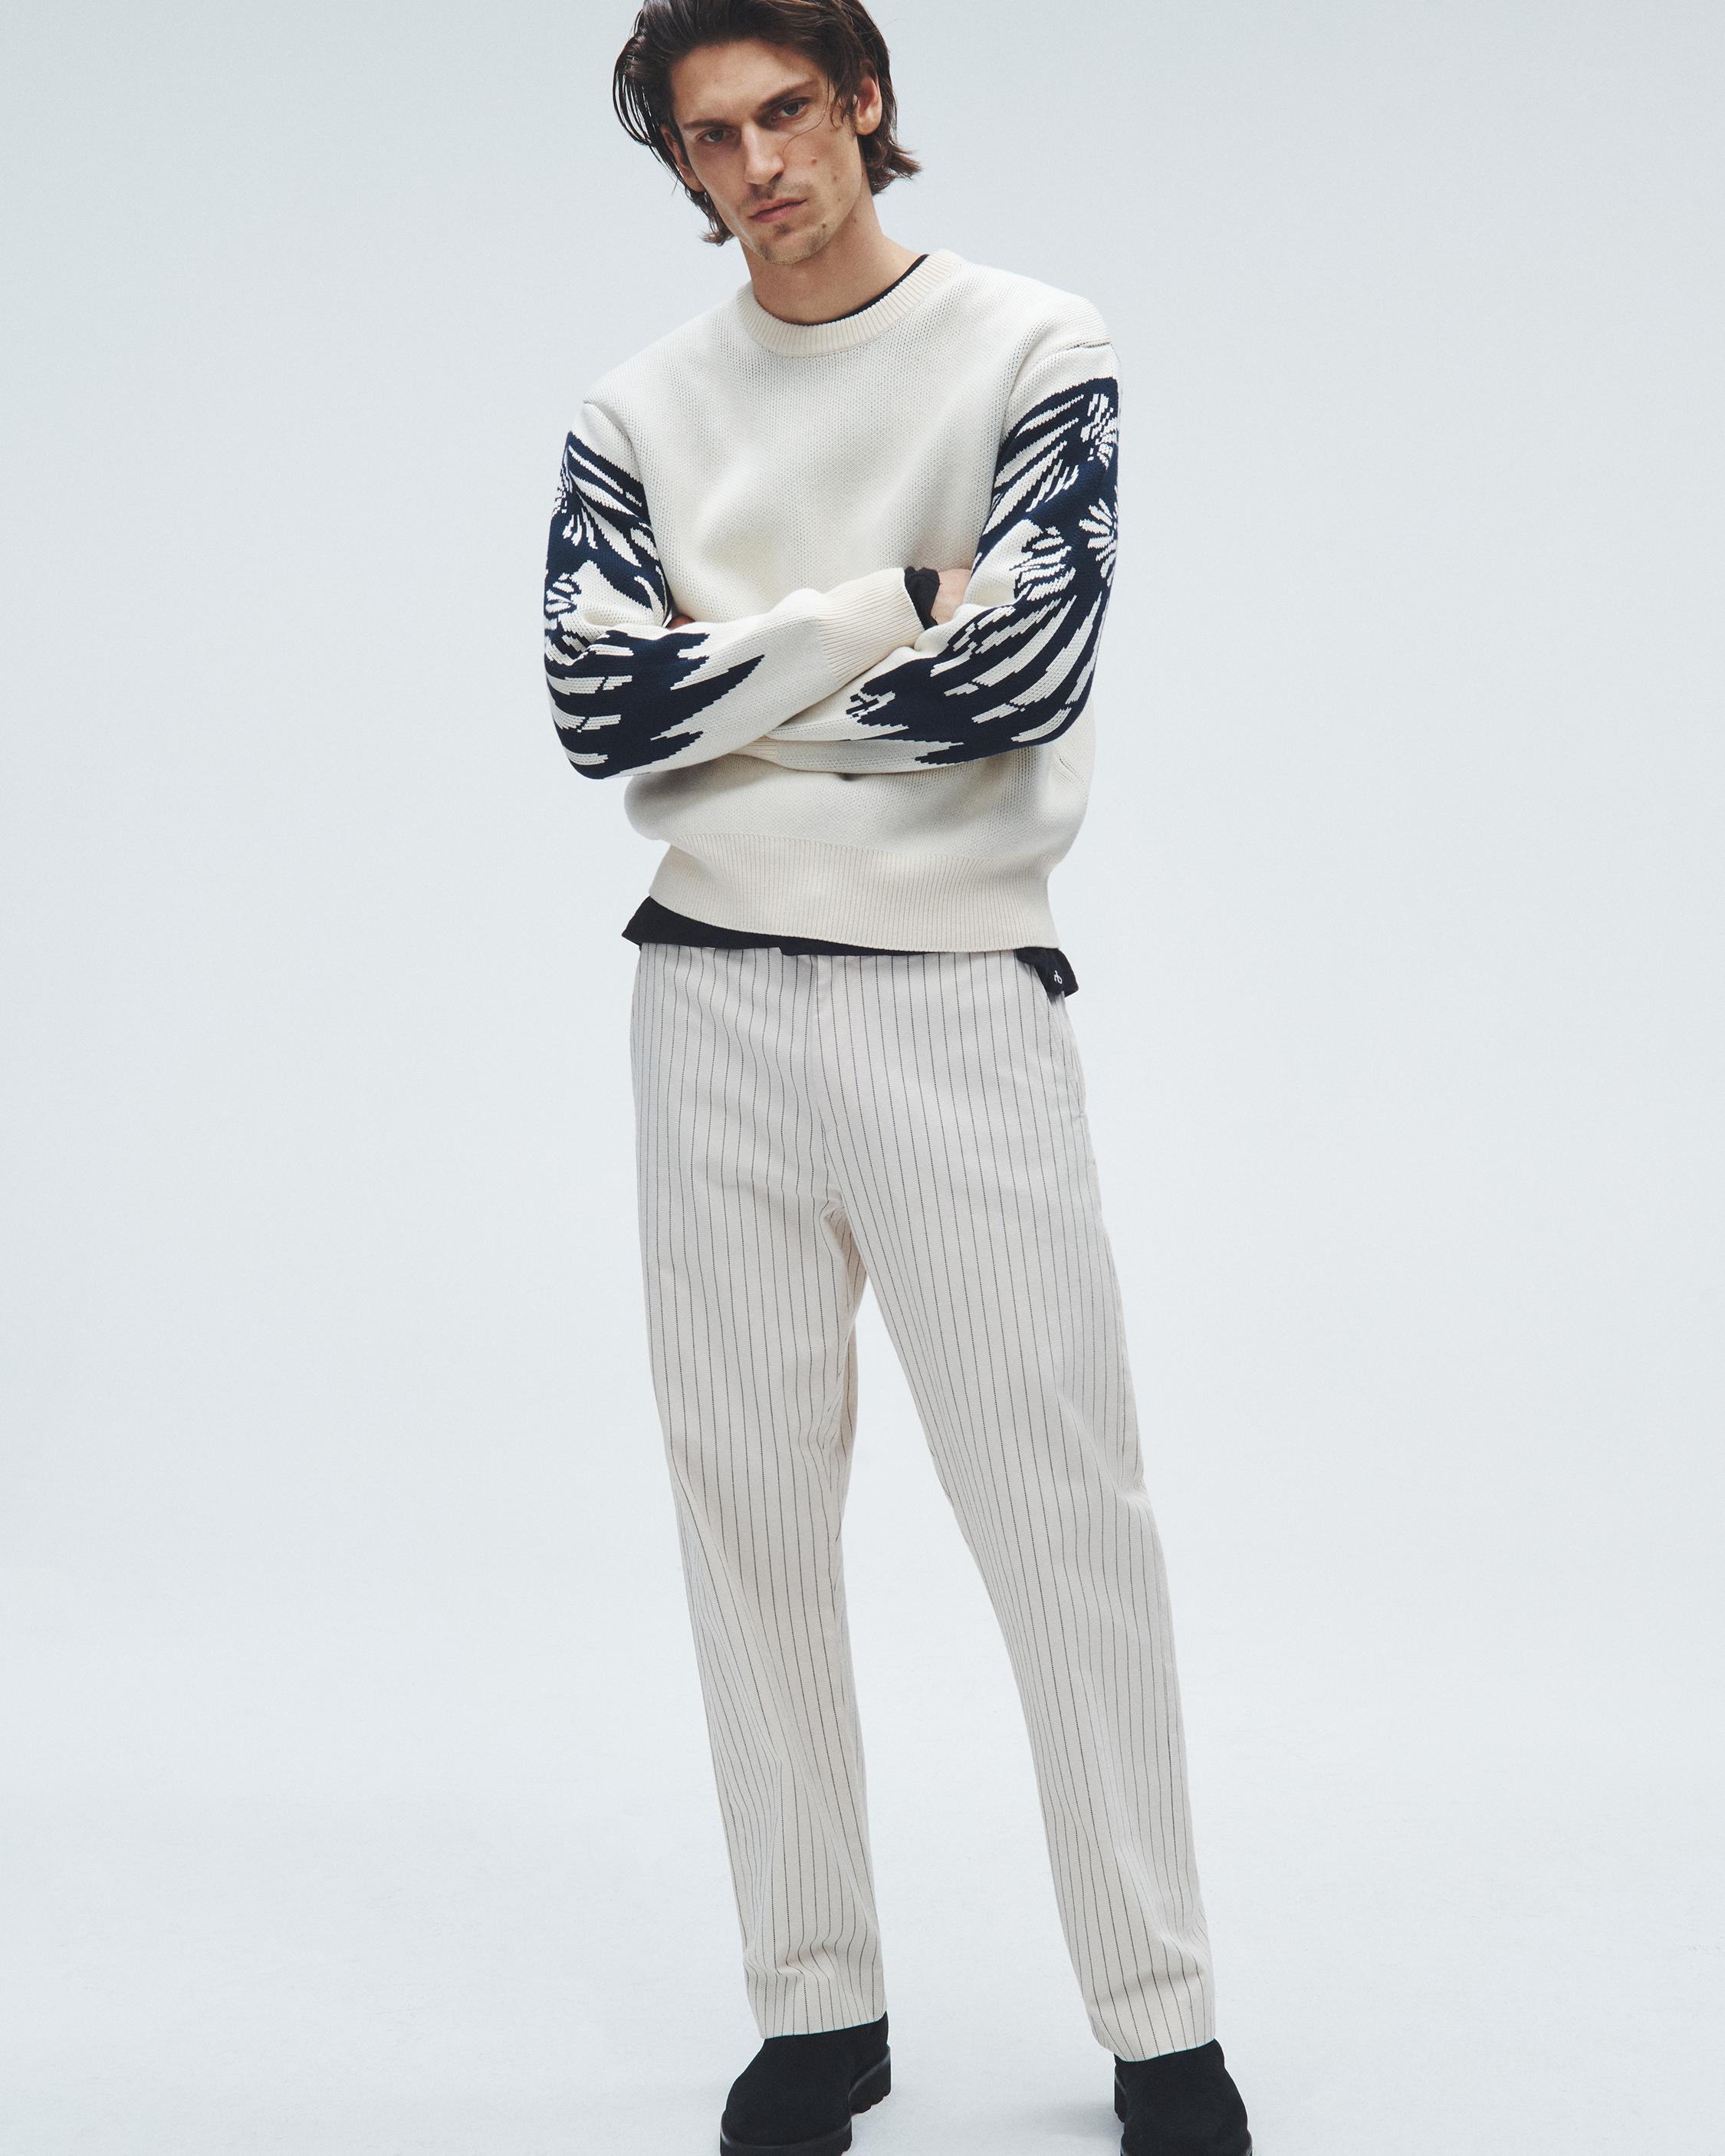 Woven Cotton Herringbone Pants with Drawcord Hems - The Numero Uno - AYR